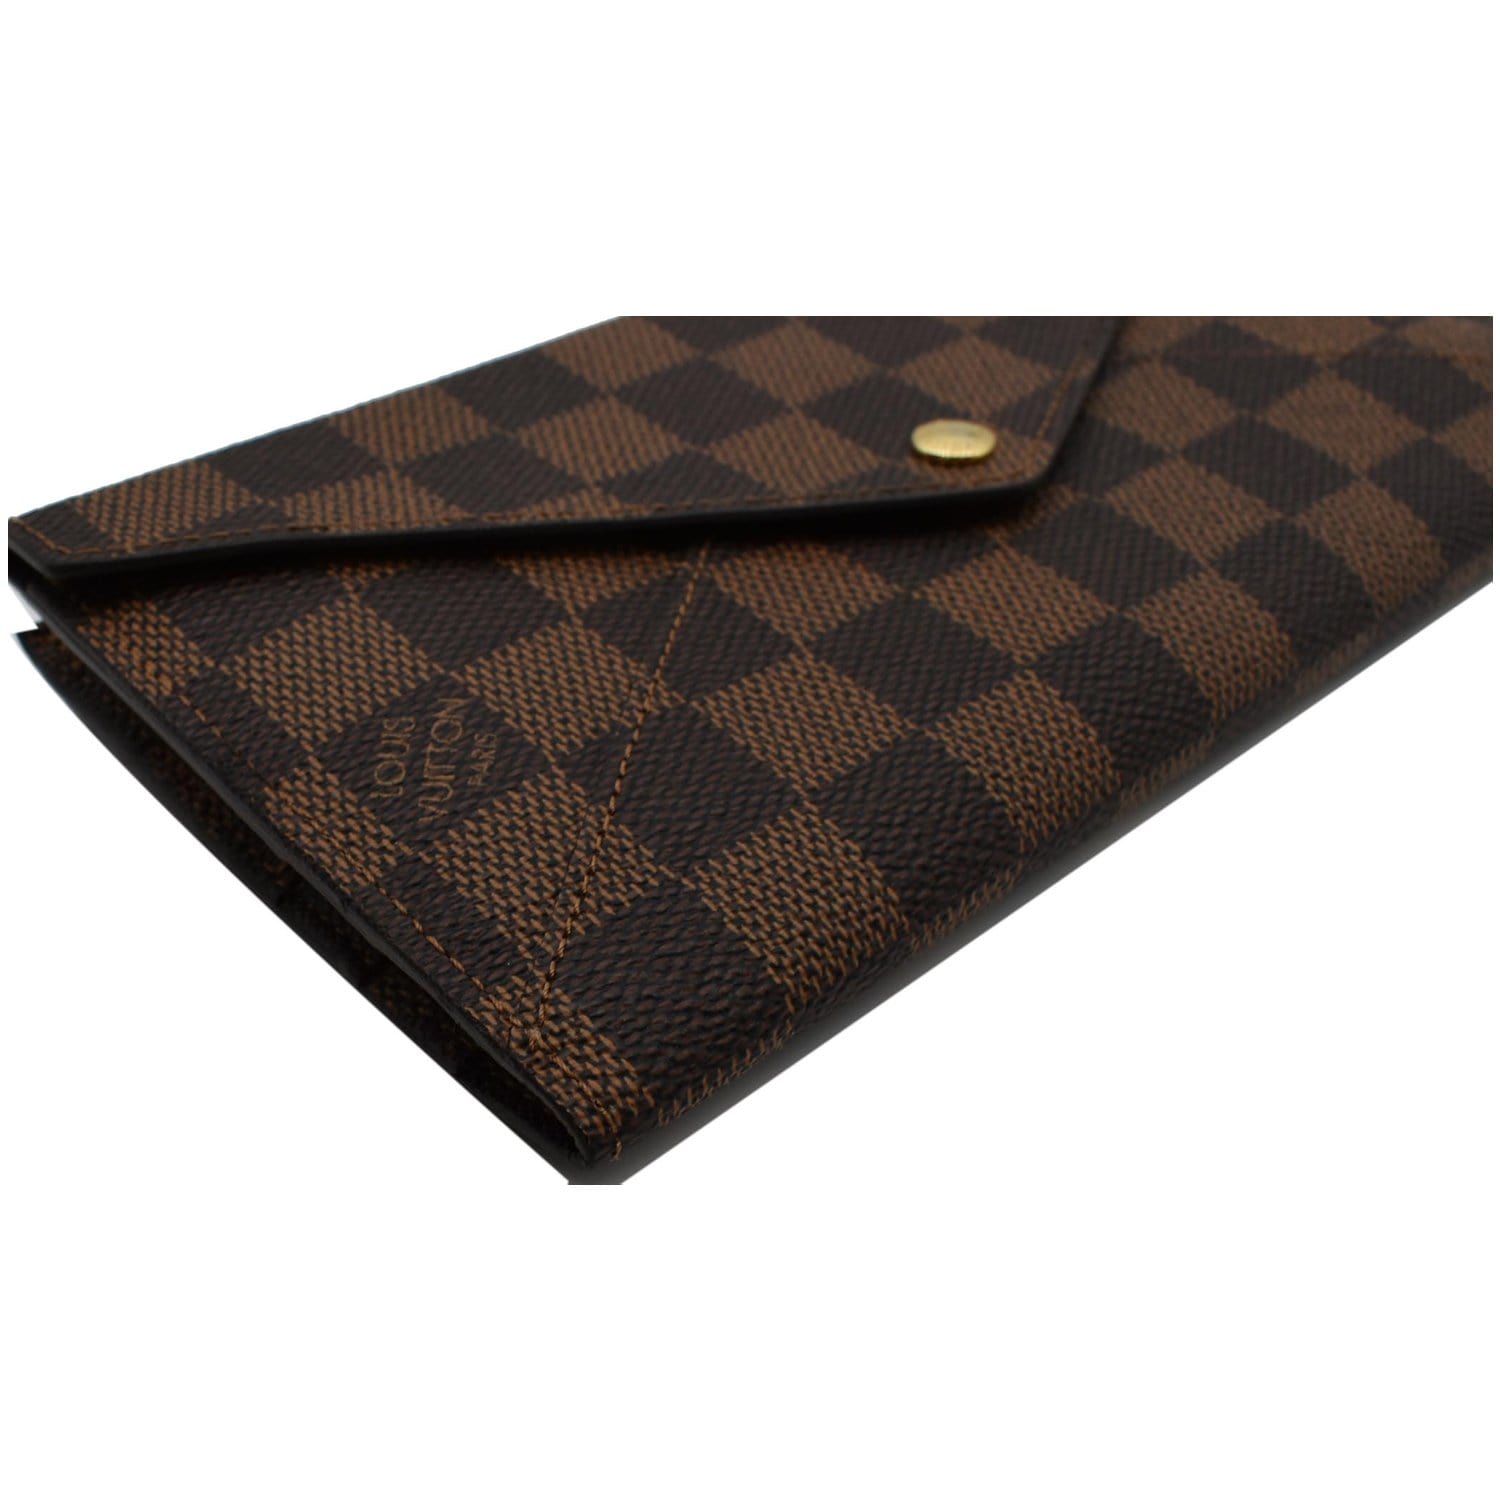 Sold at Auction: Louis Vuitton, Louis Vuitton Damier Ebene Pattern Origami  Long Wallet